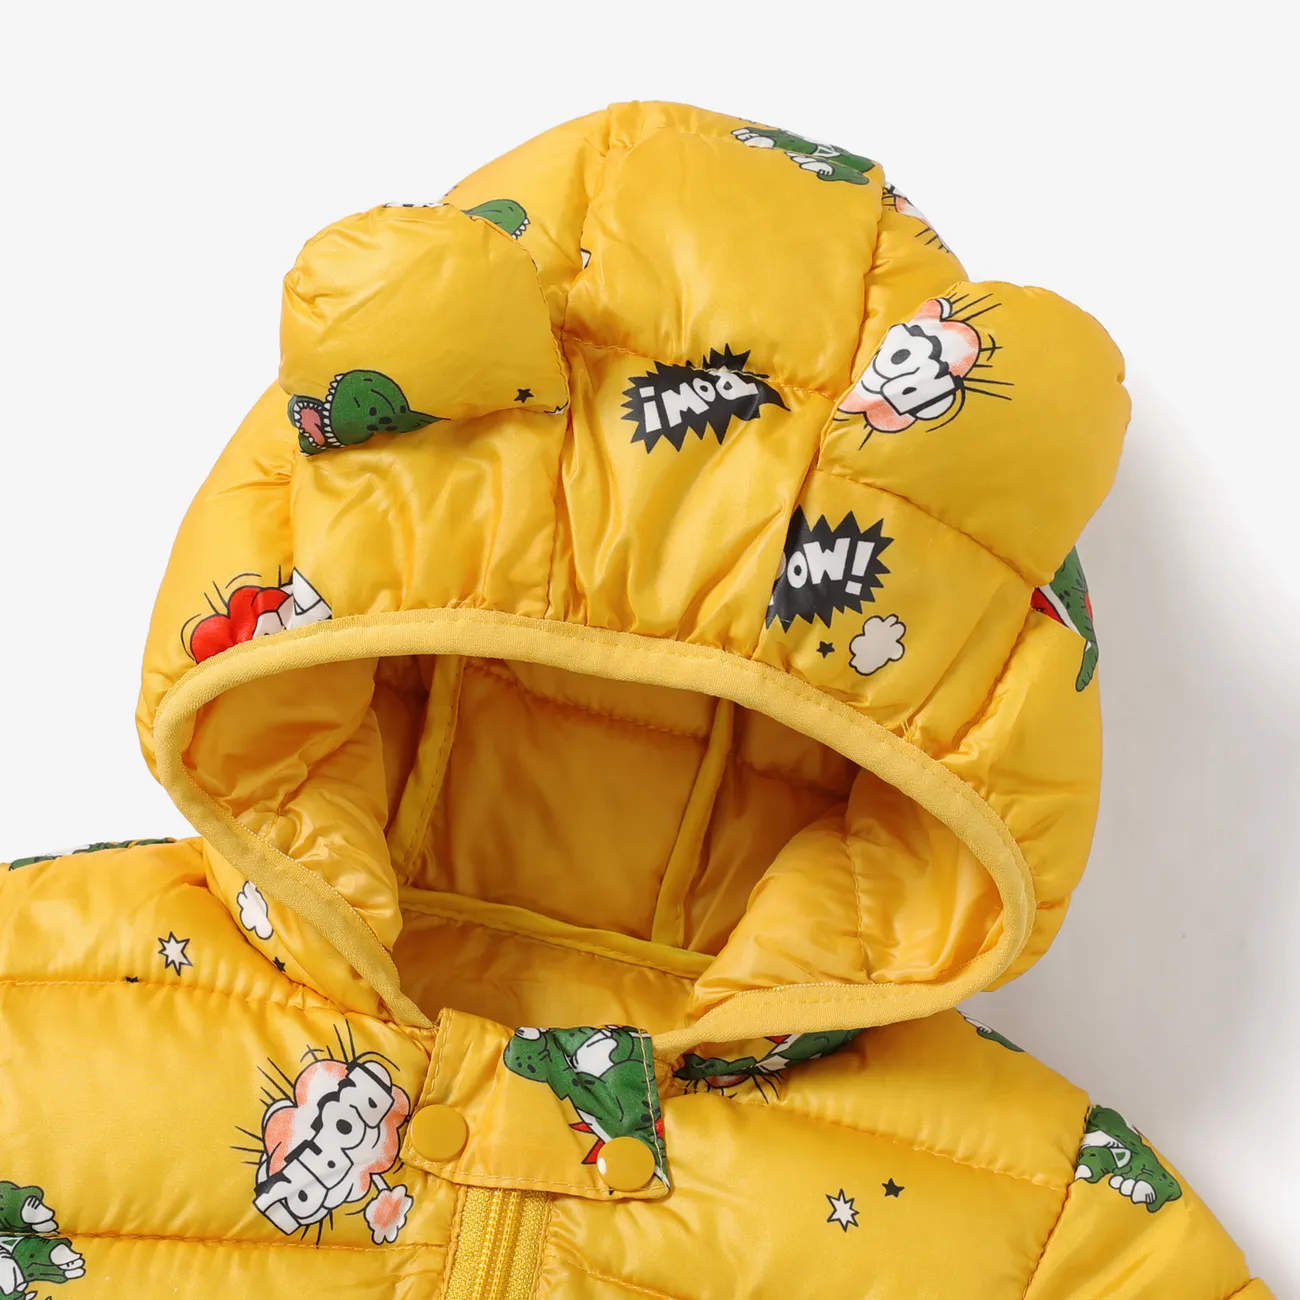 Toddler Girl/Boy Ear Design Animal Print Hooded Coat Yellow big image 1